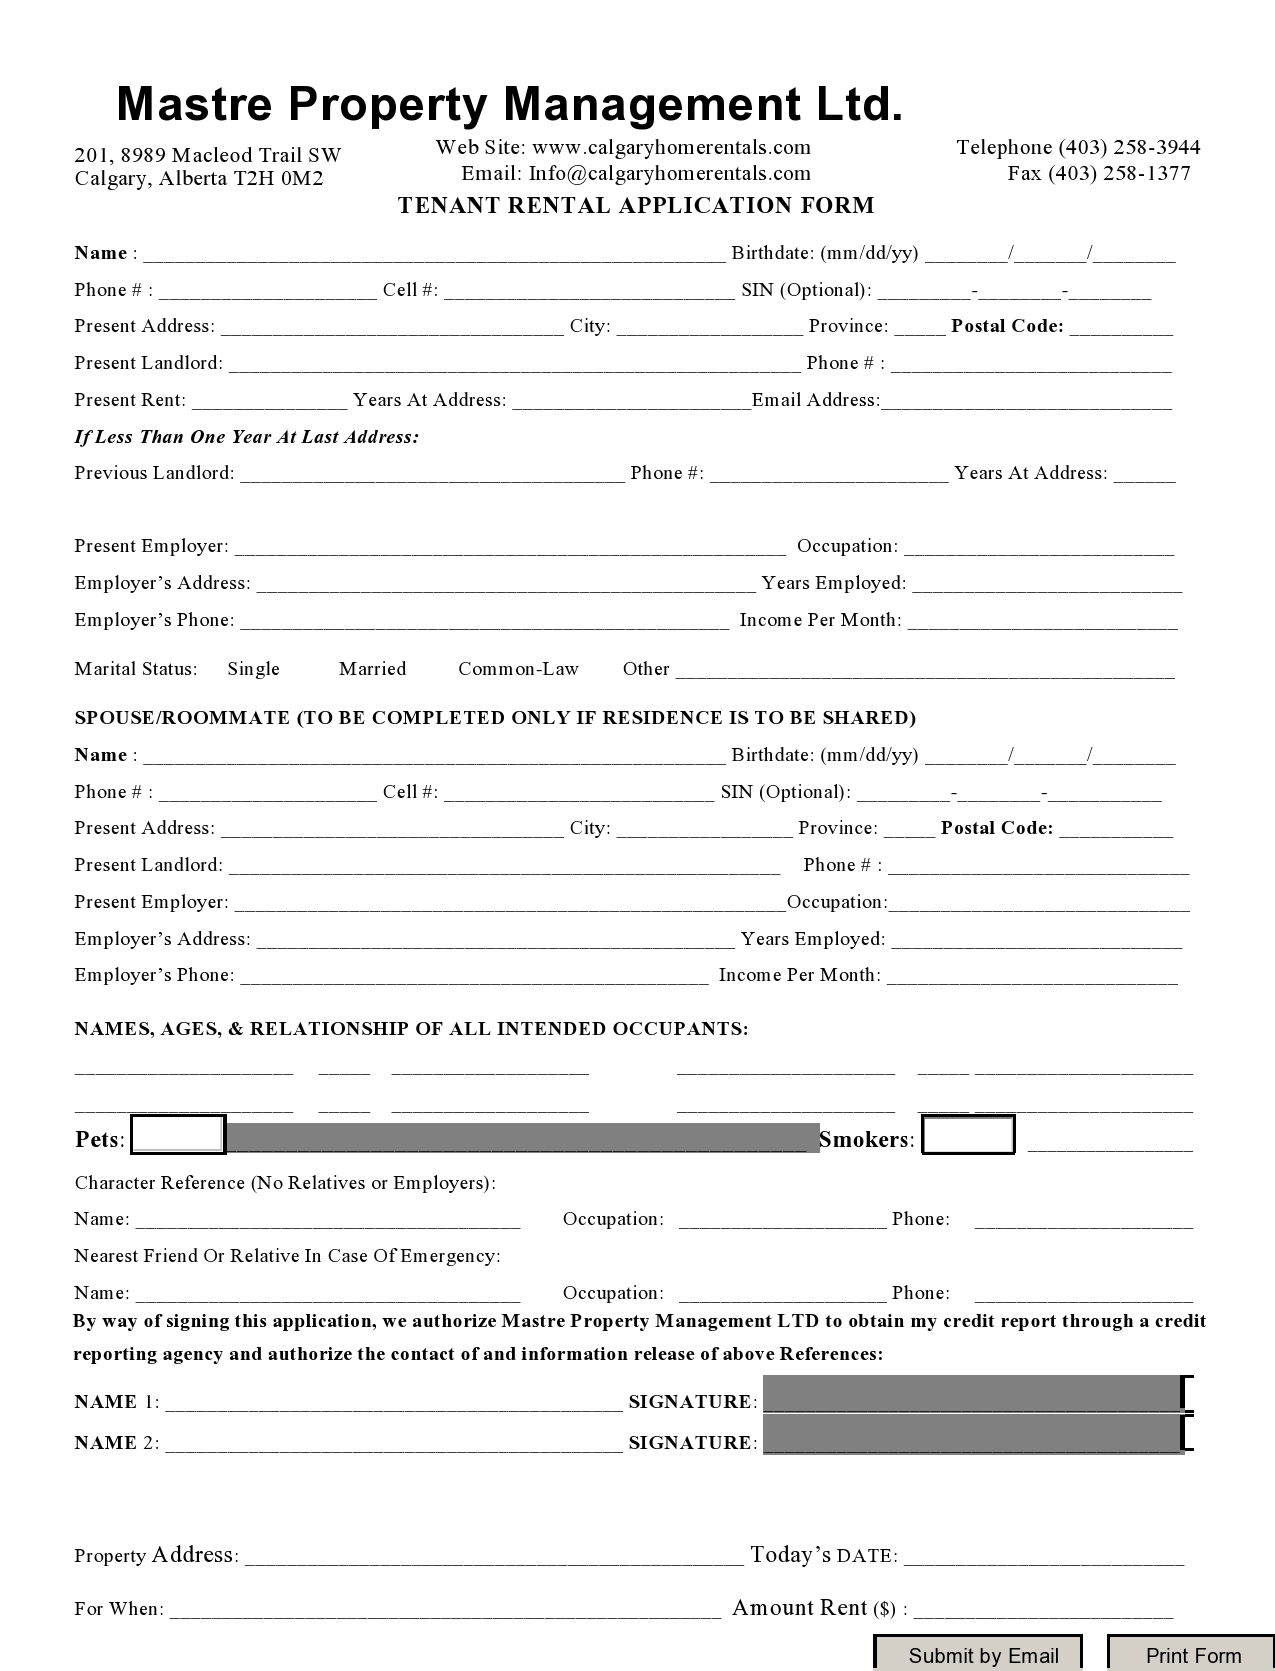 Free rental application form 45